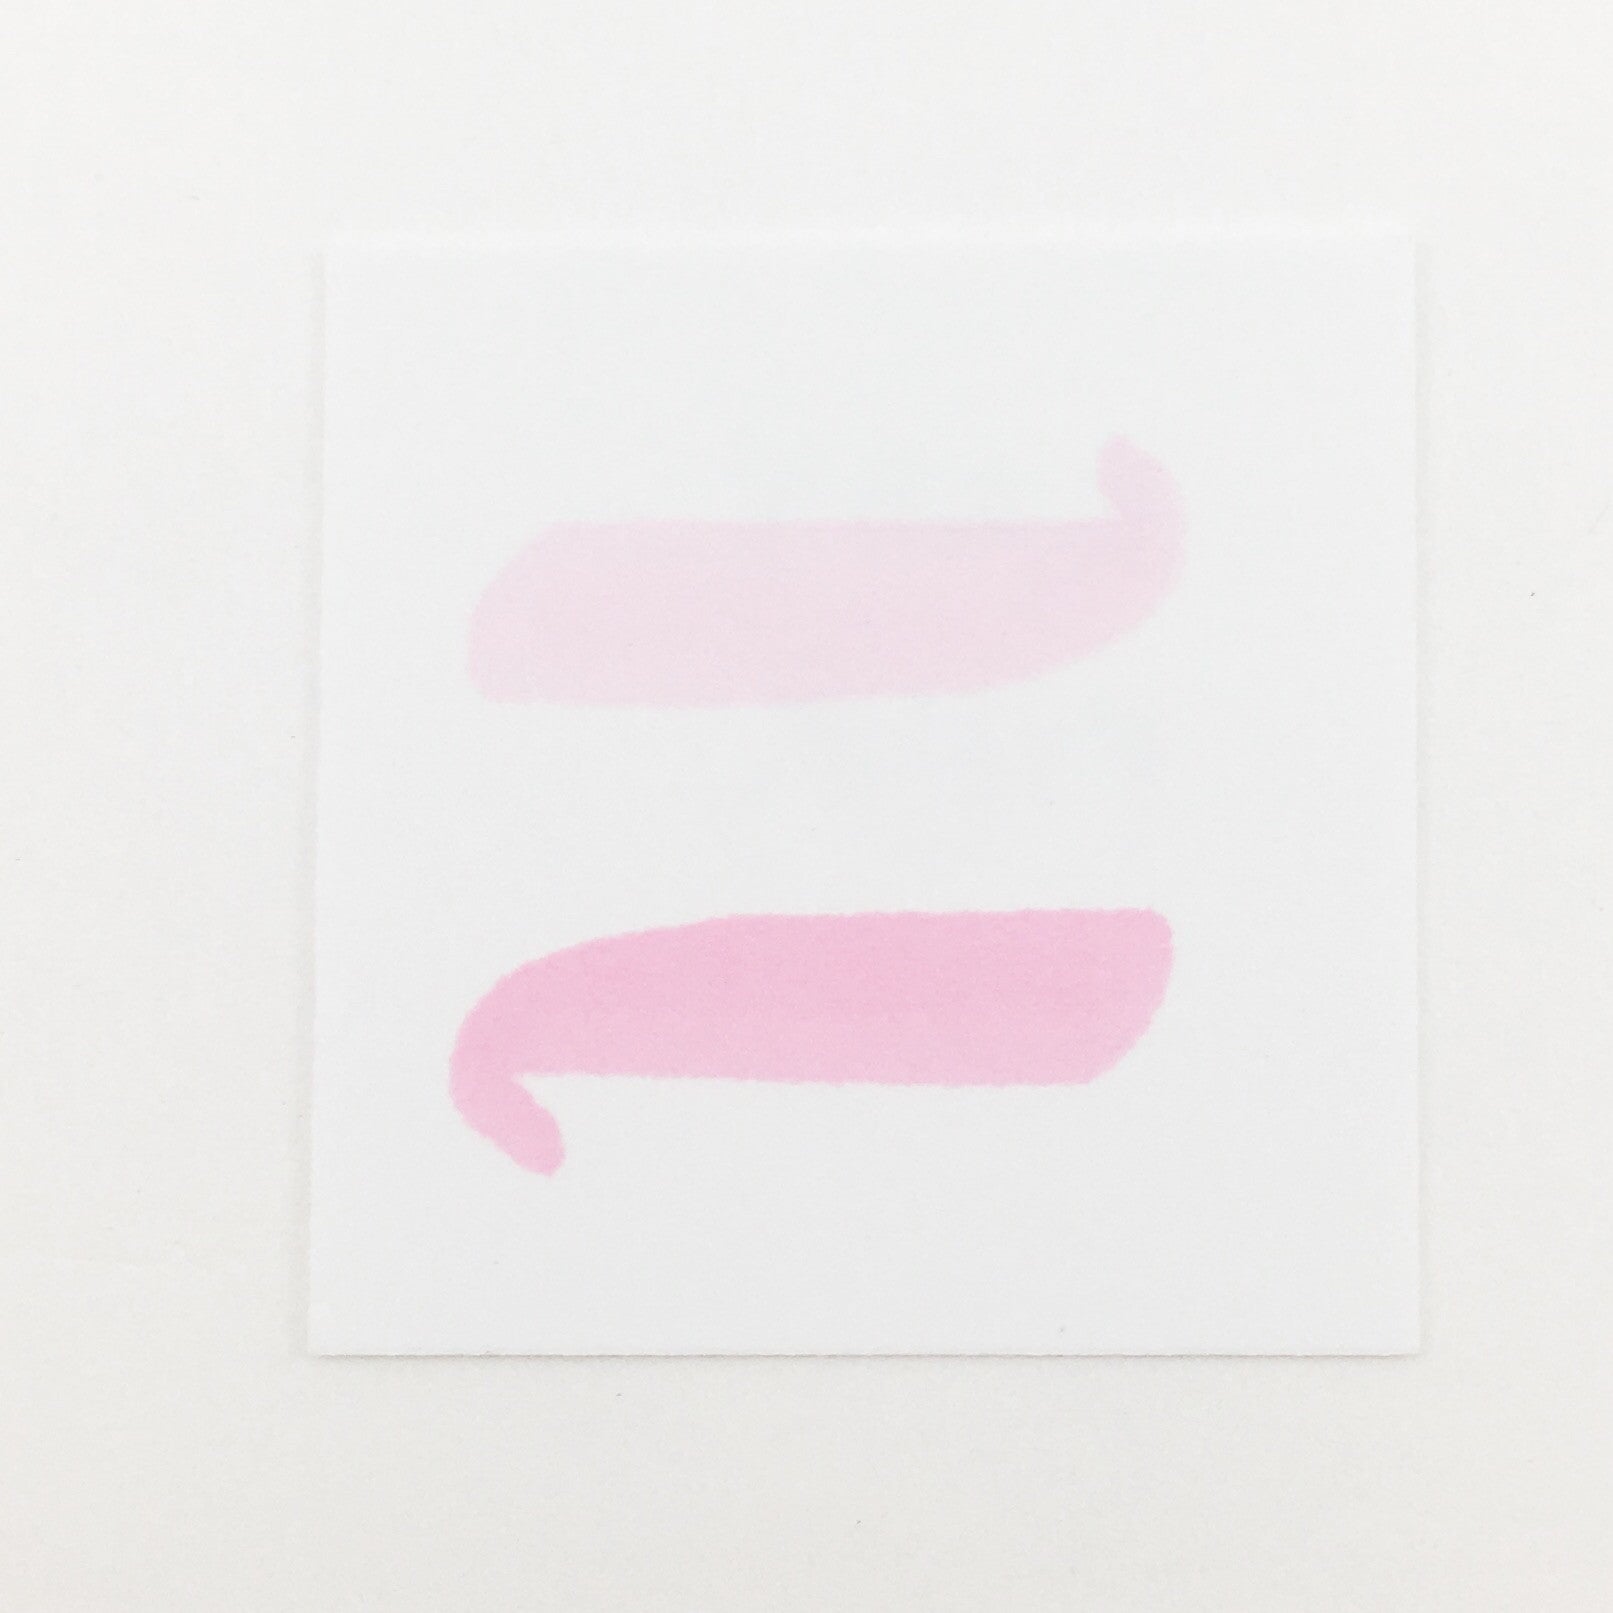 Kuretake Zig "Brushables" Two-Tone Brush Markers - 026 - Baby Pink by Kuretake - K. A. Artist Shop